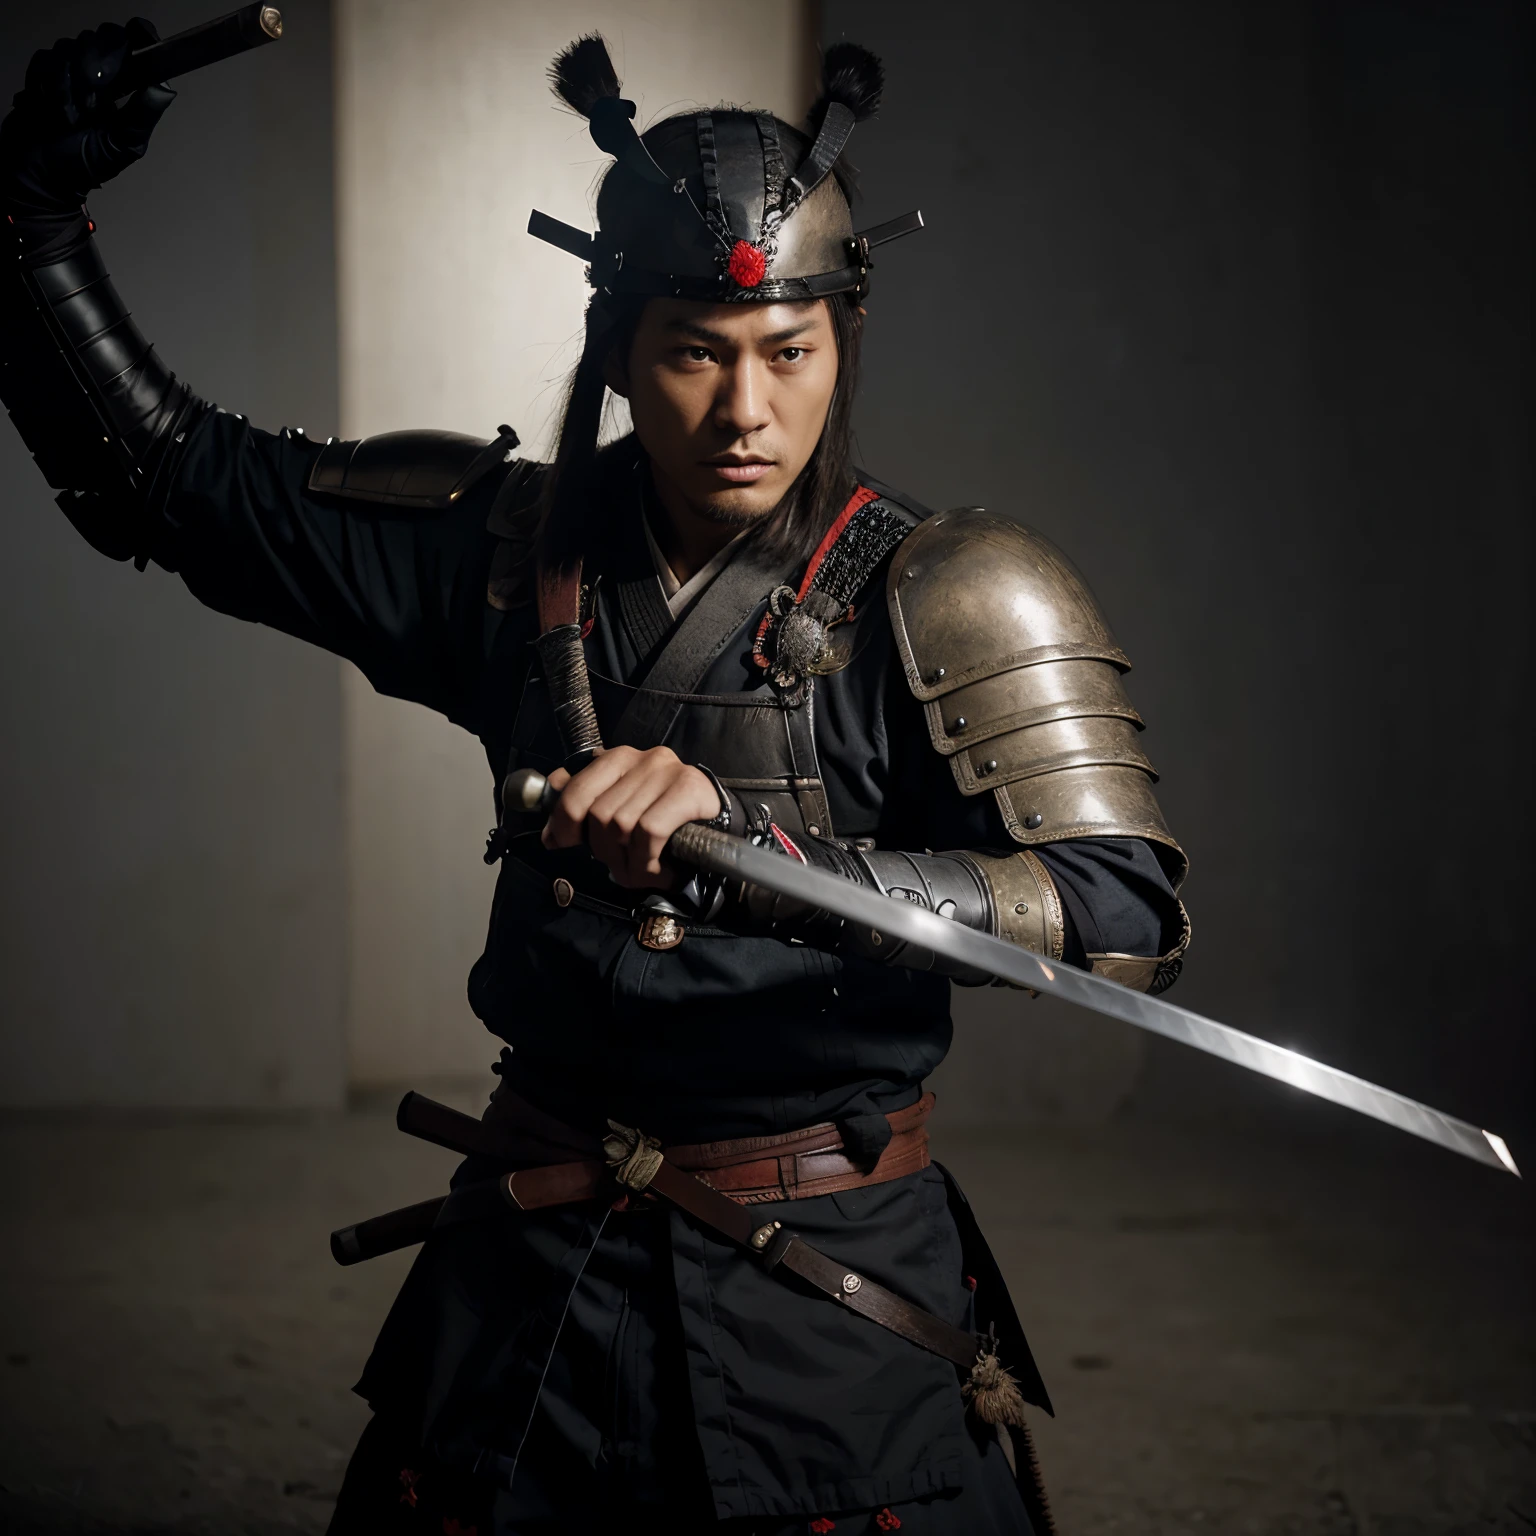 Samurai with a sword, katana, hyperrealism, samurai armor and helmet, 